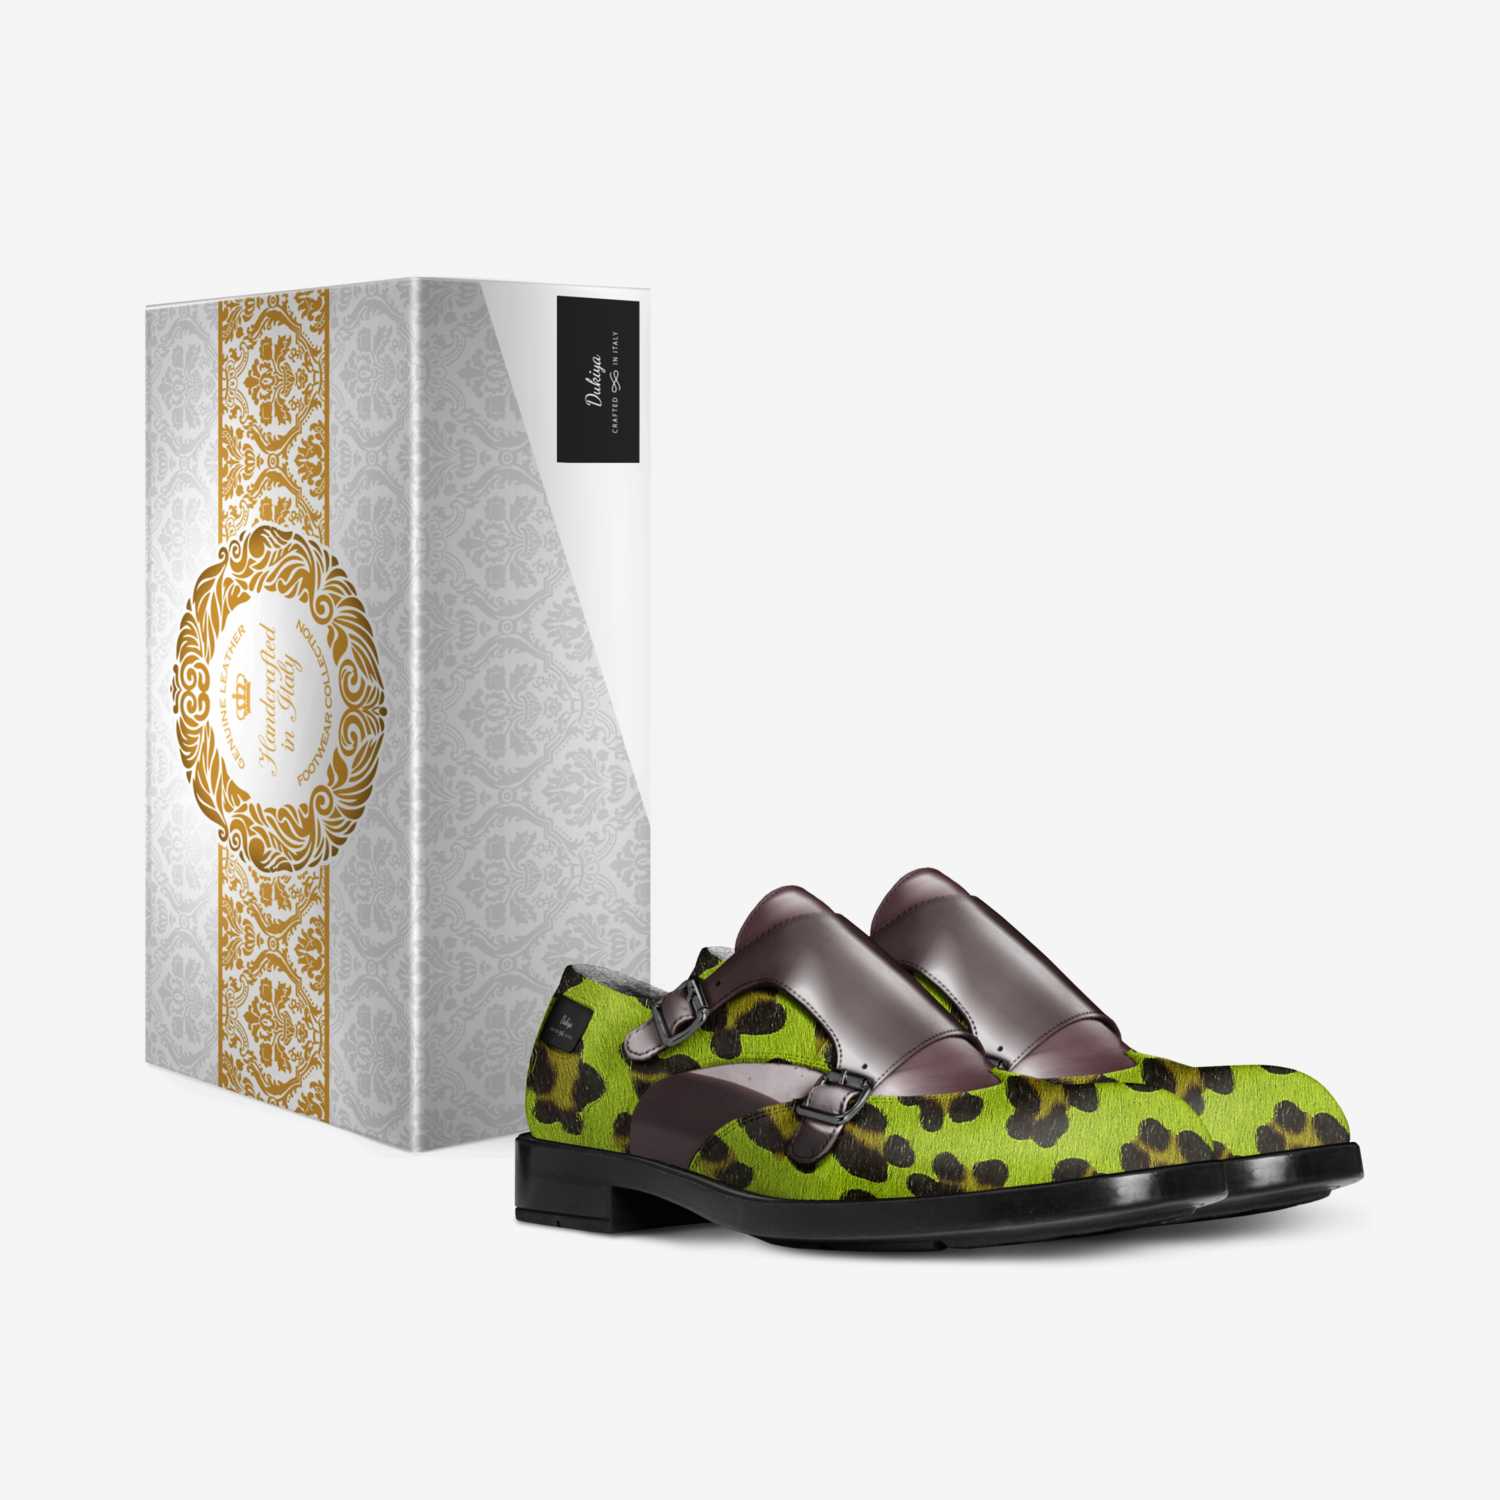 Dukiya II custom made in Italy shoes by Will Johnson | Box view